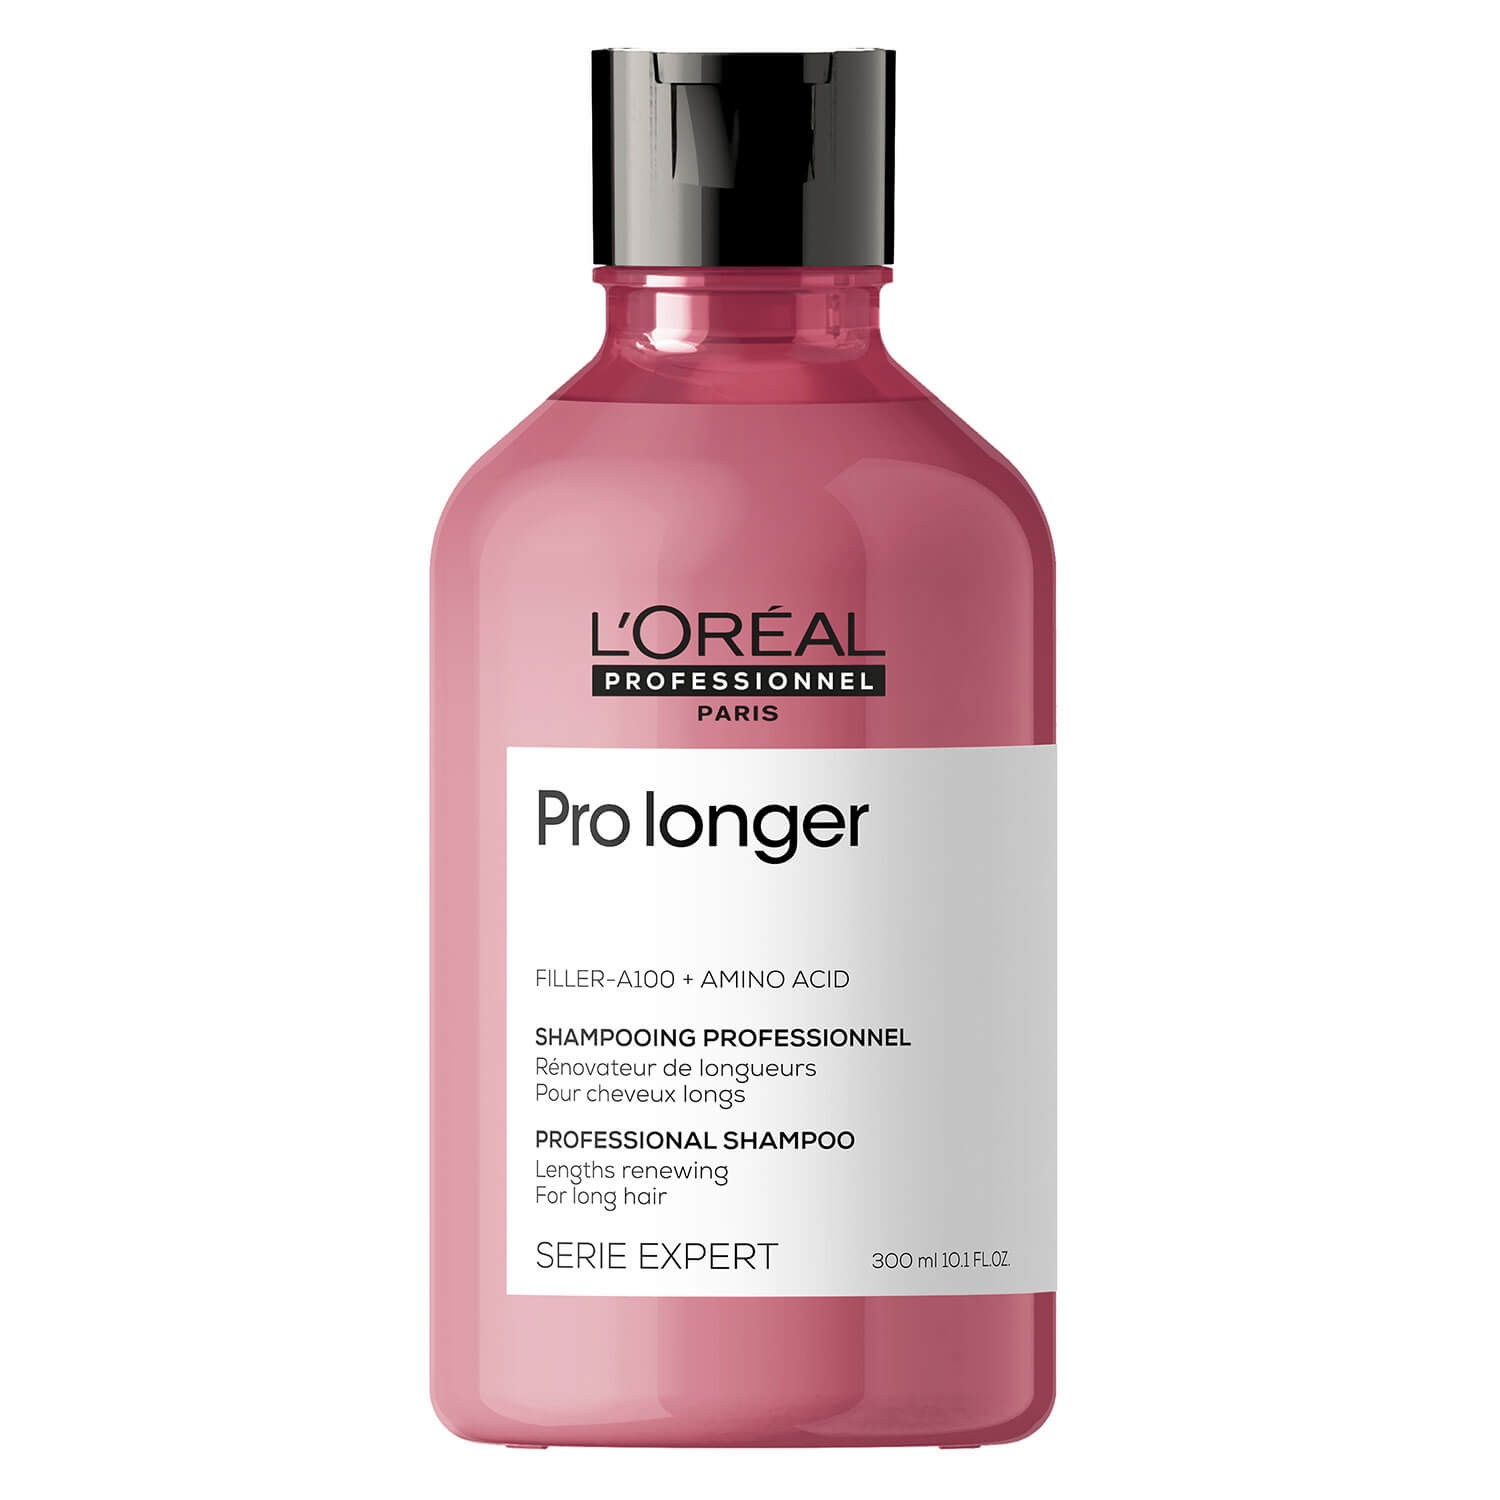 Produktbild von Série Expert Pro Longer - Professional Shampoo